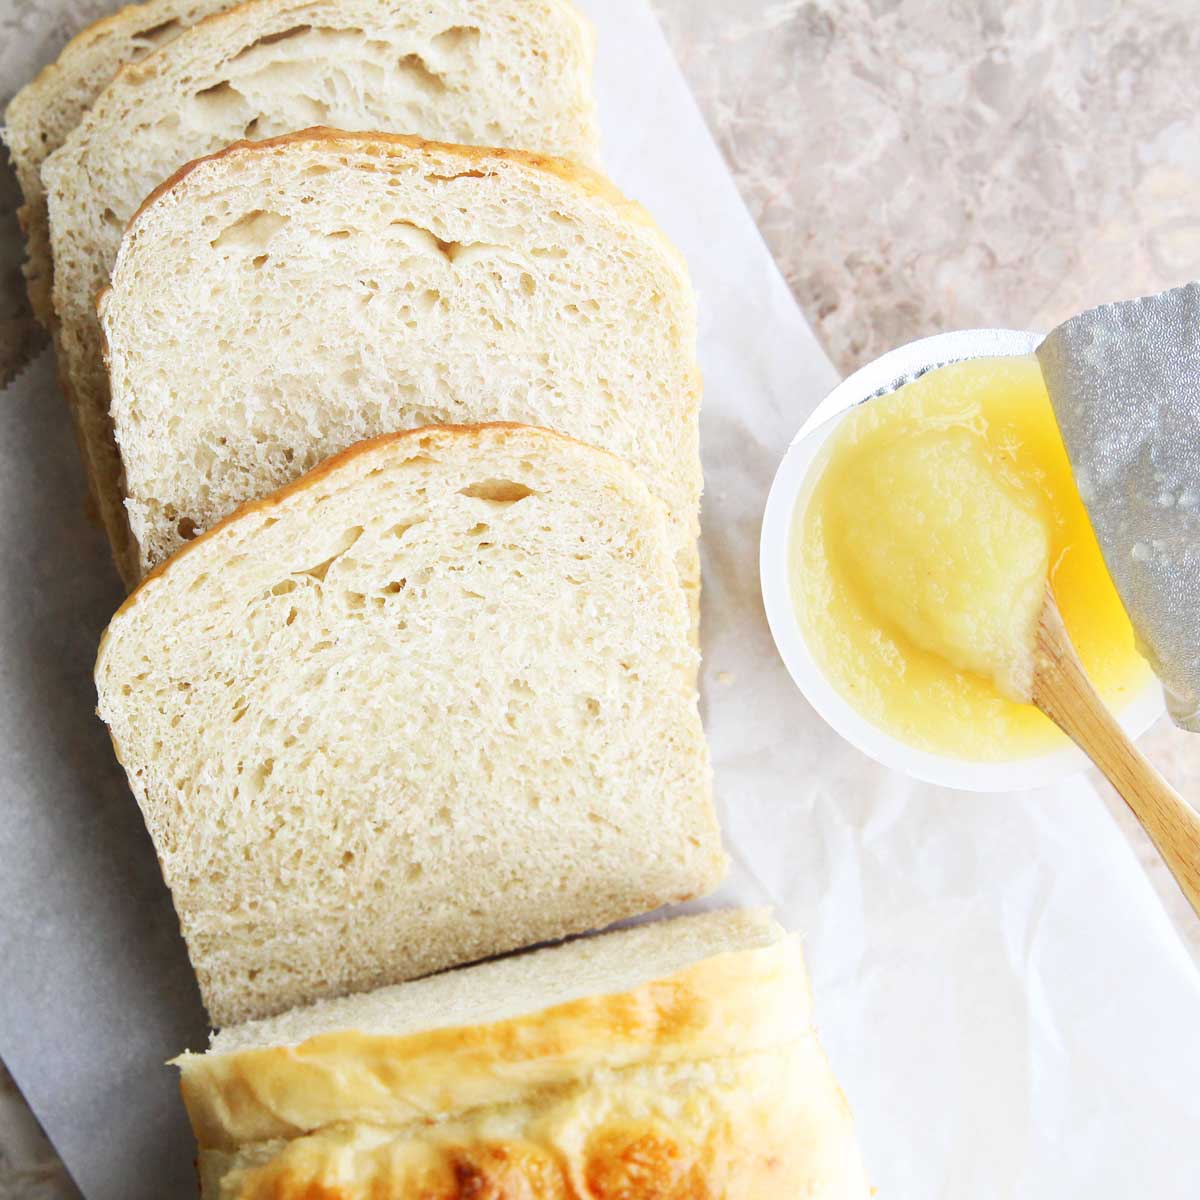 Applesauce Yeast Bread (A Healthier Recipe for White Bread) - Carrot Cake Cinnamon Rolls